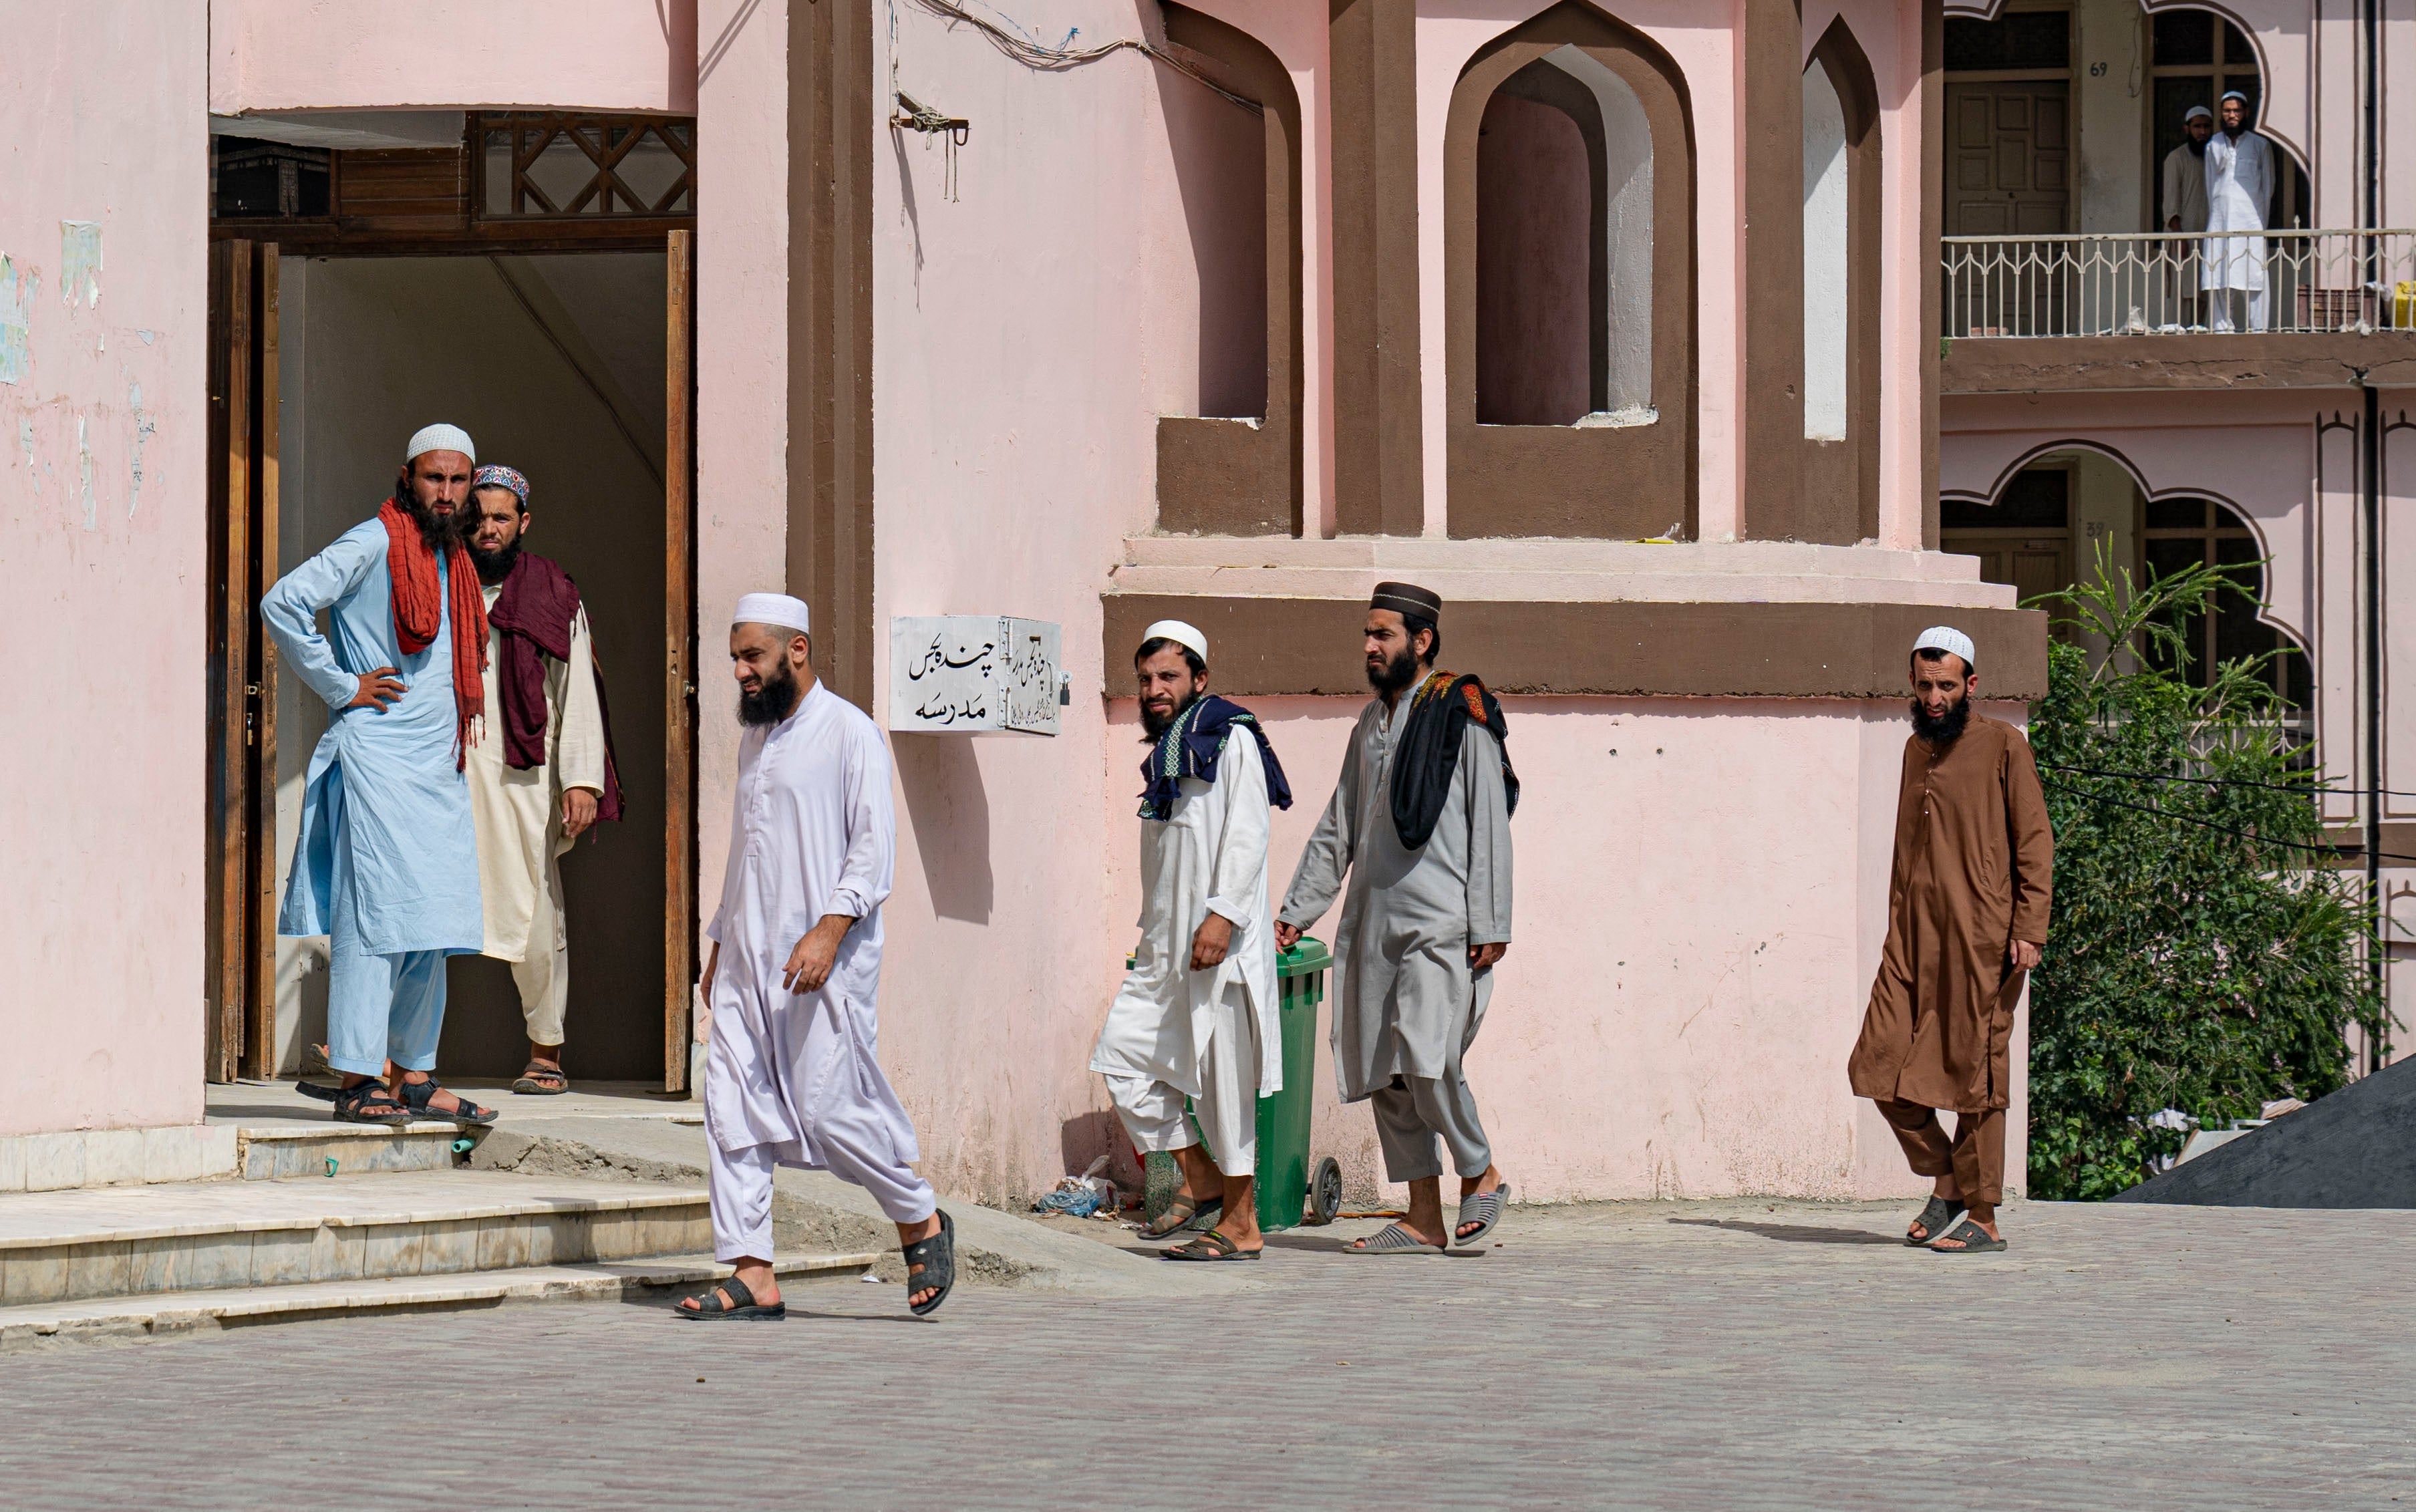 Darul Uloom Haqqania seminary in Khyber Pakhtunkhwa province, northwestern Pakistan